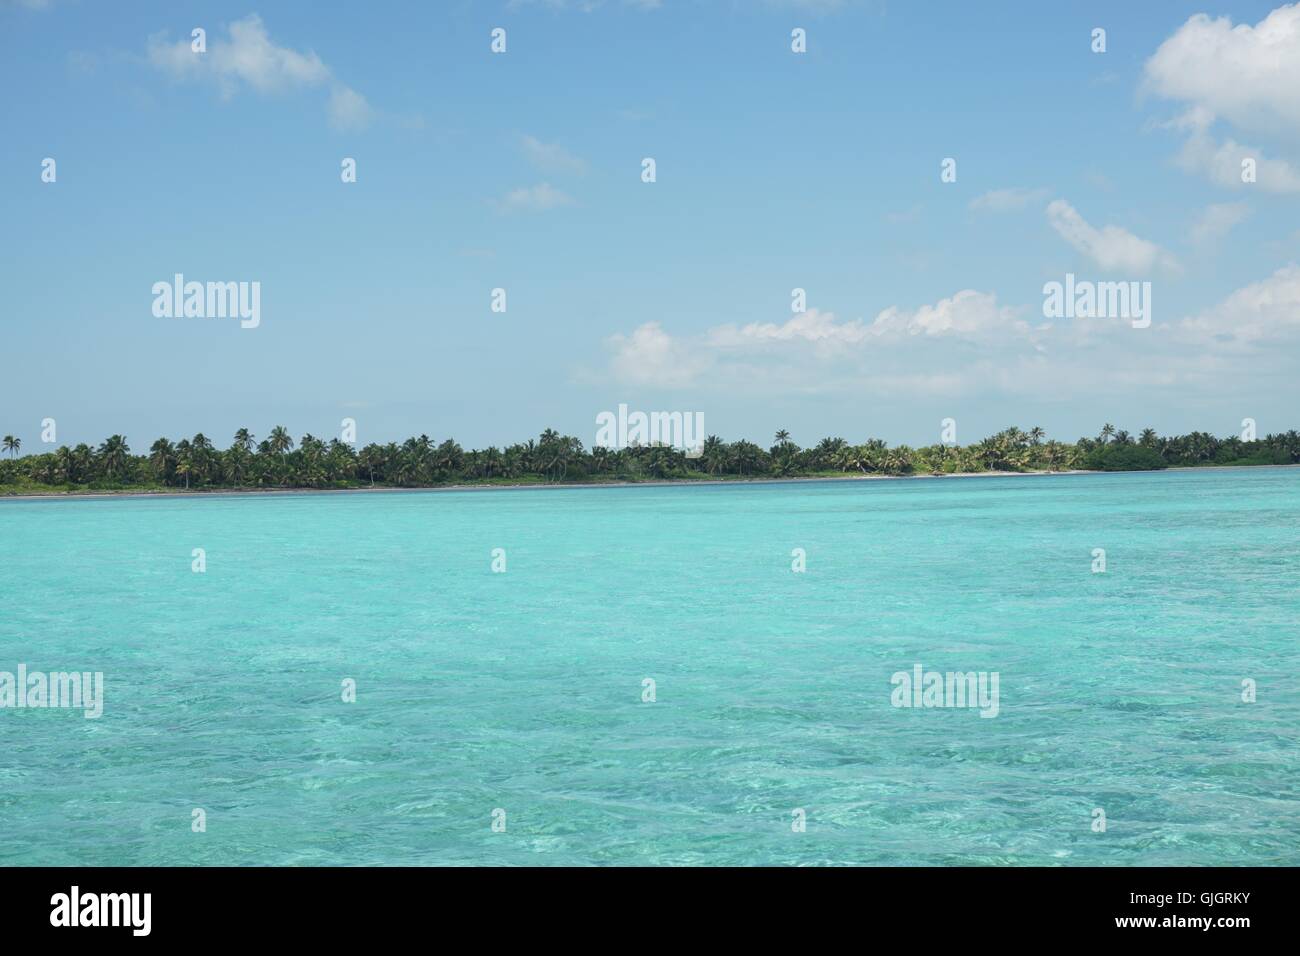 Karibik - türkisfarbenen Wasser der Karibik. Fotografiert in Ambergris Caye, Belize. Querformat. Stockfoto